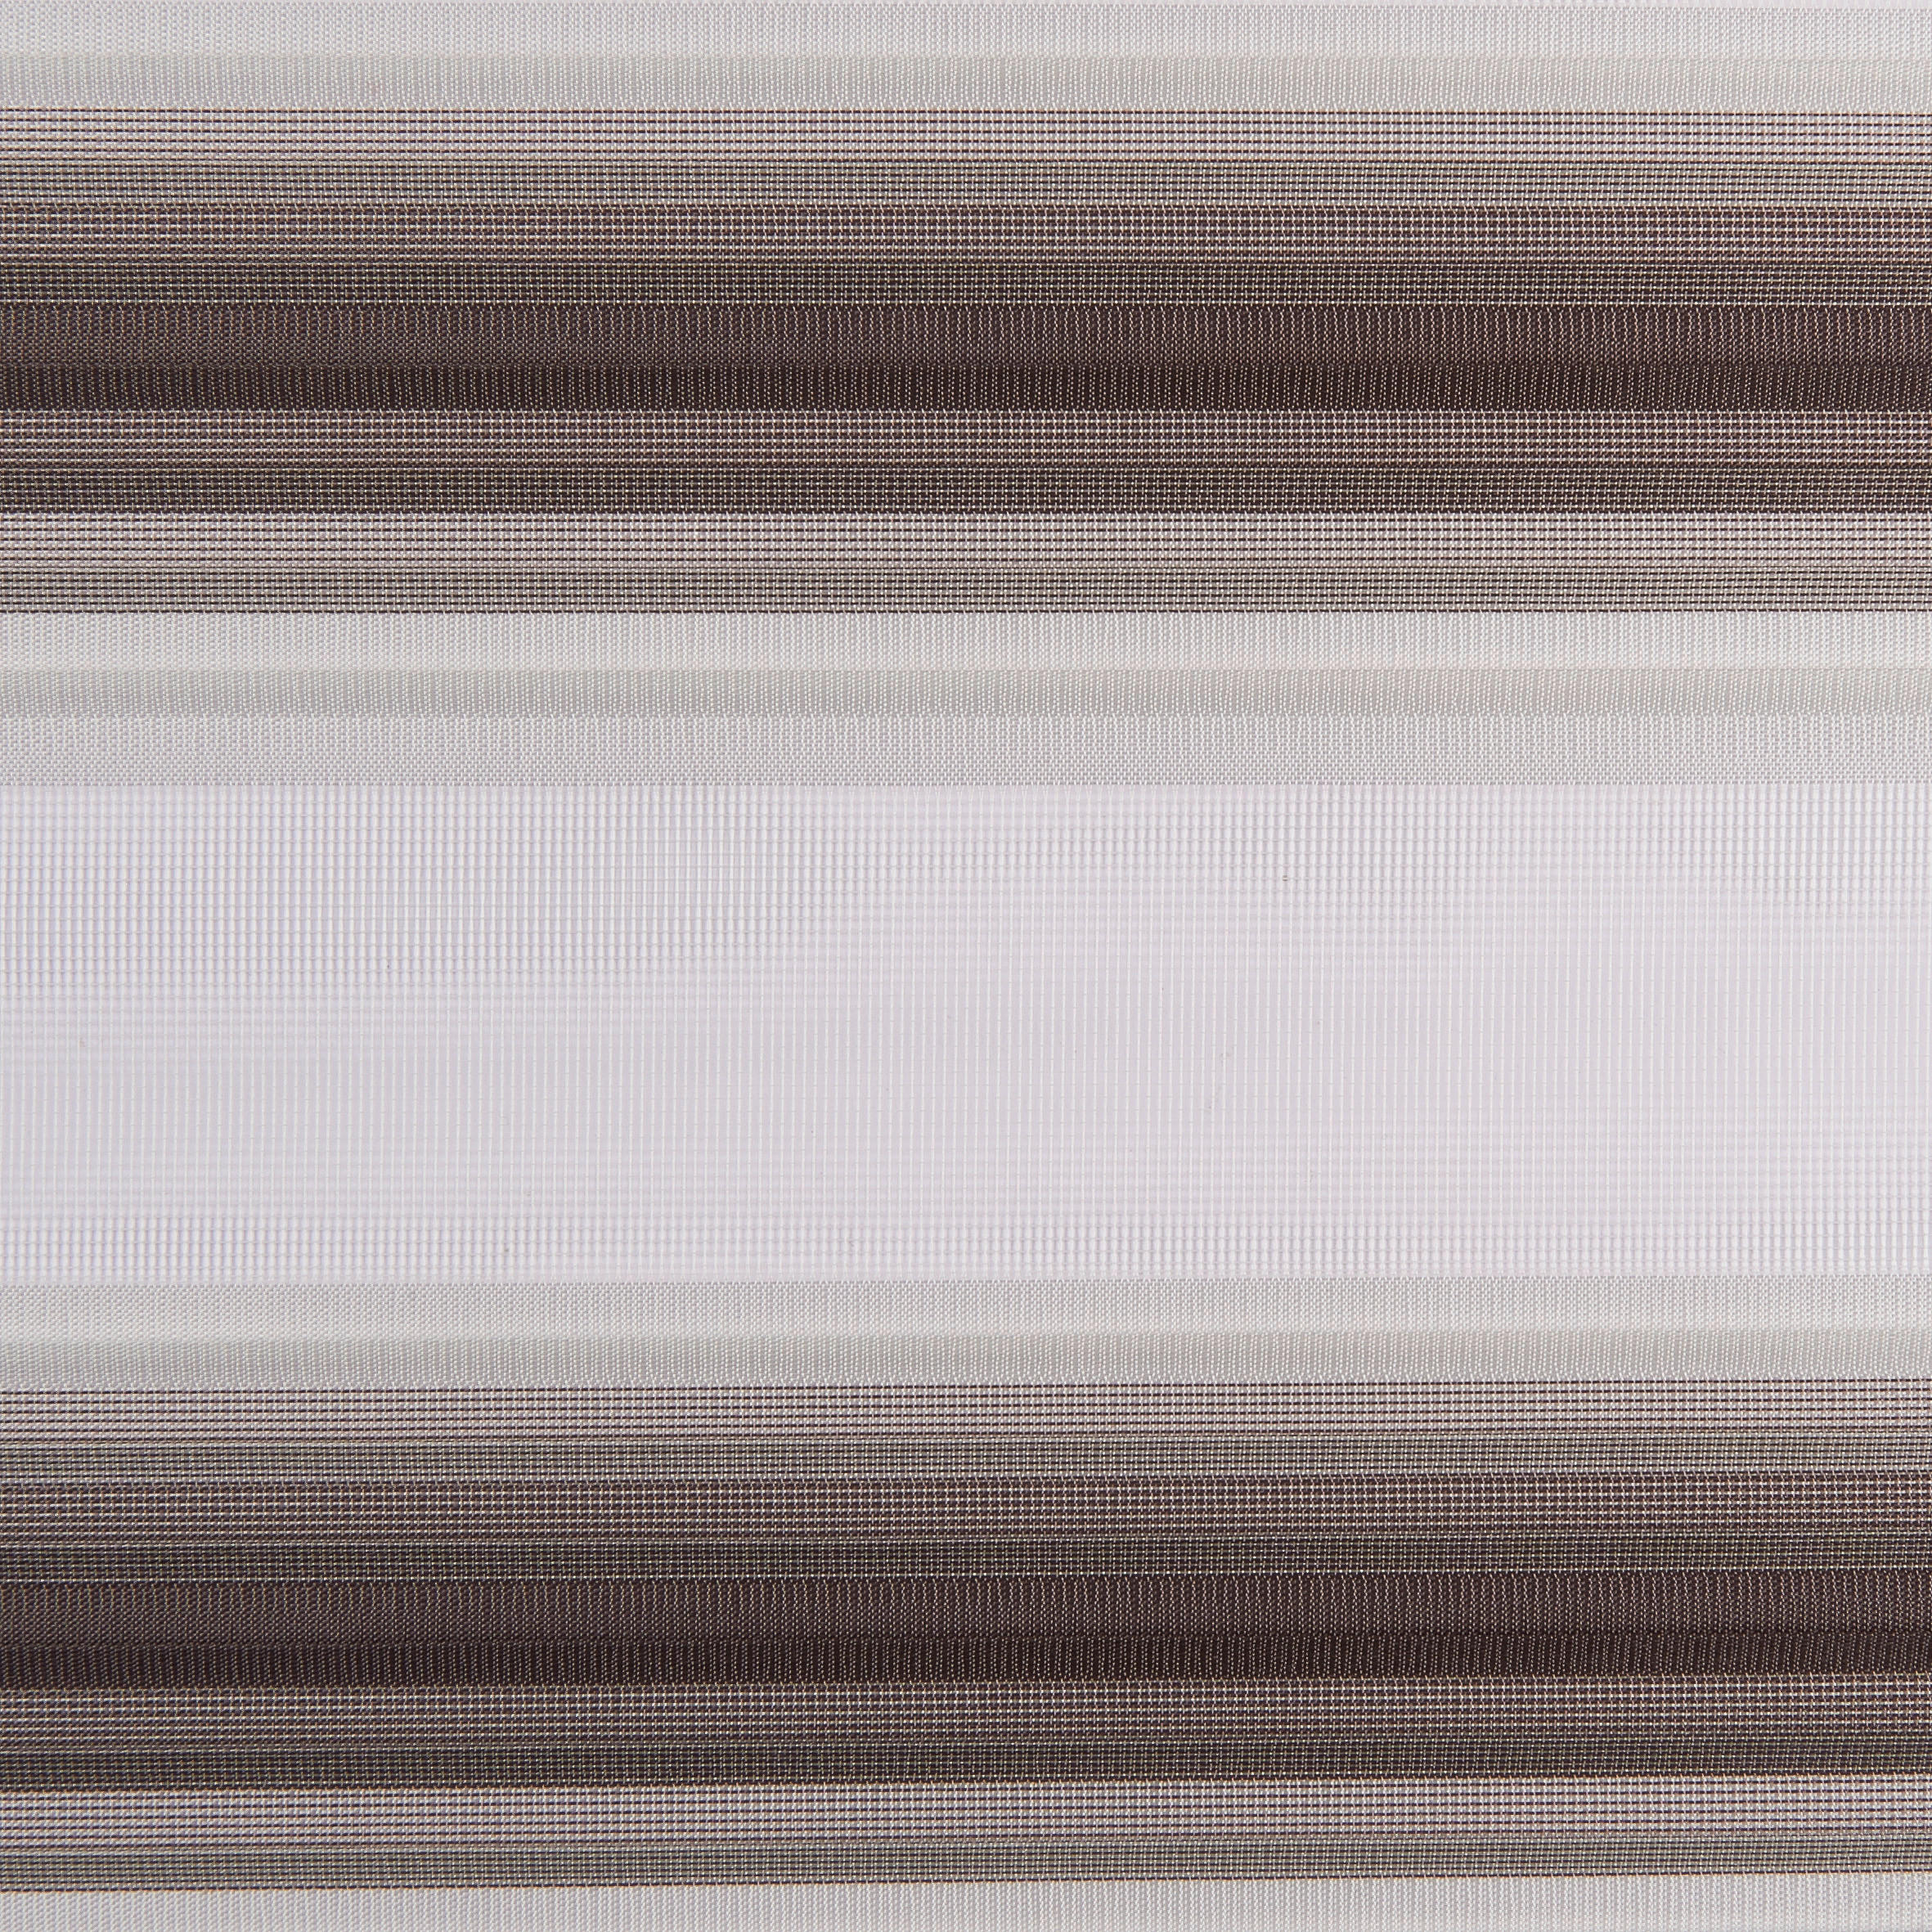 Schiebevorhang Timba grau B/L: ca. 60x245 cm Timba - grau (60,00/245,00cm)